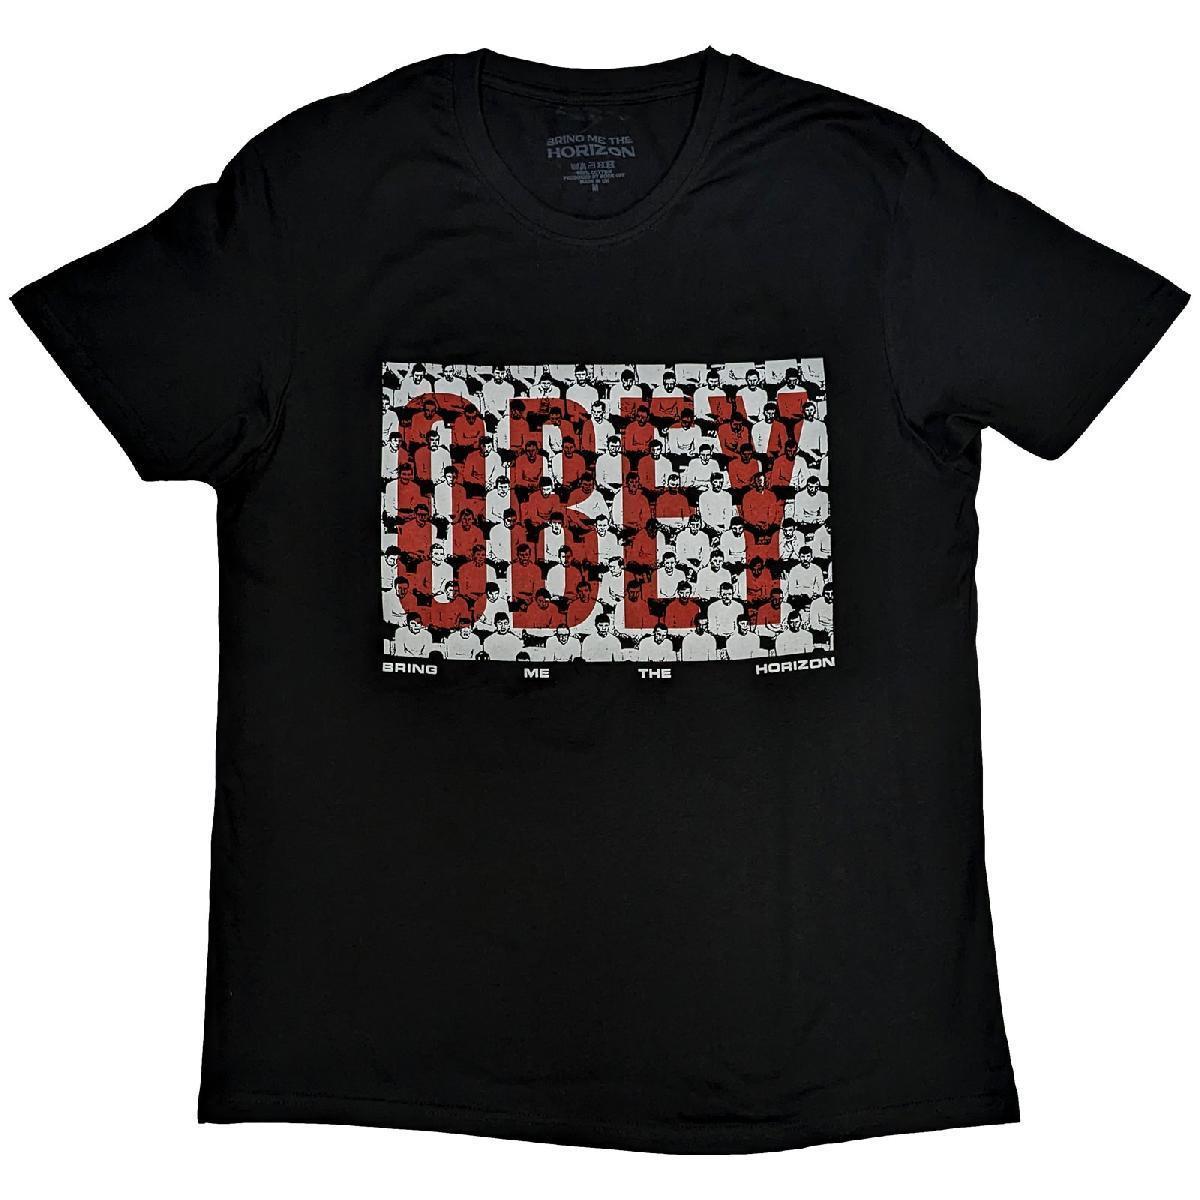 Bring Me The Horizon Unisex Adult Obey T-Shirt (Black) (L)